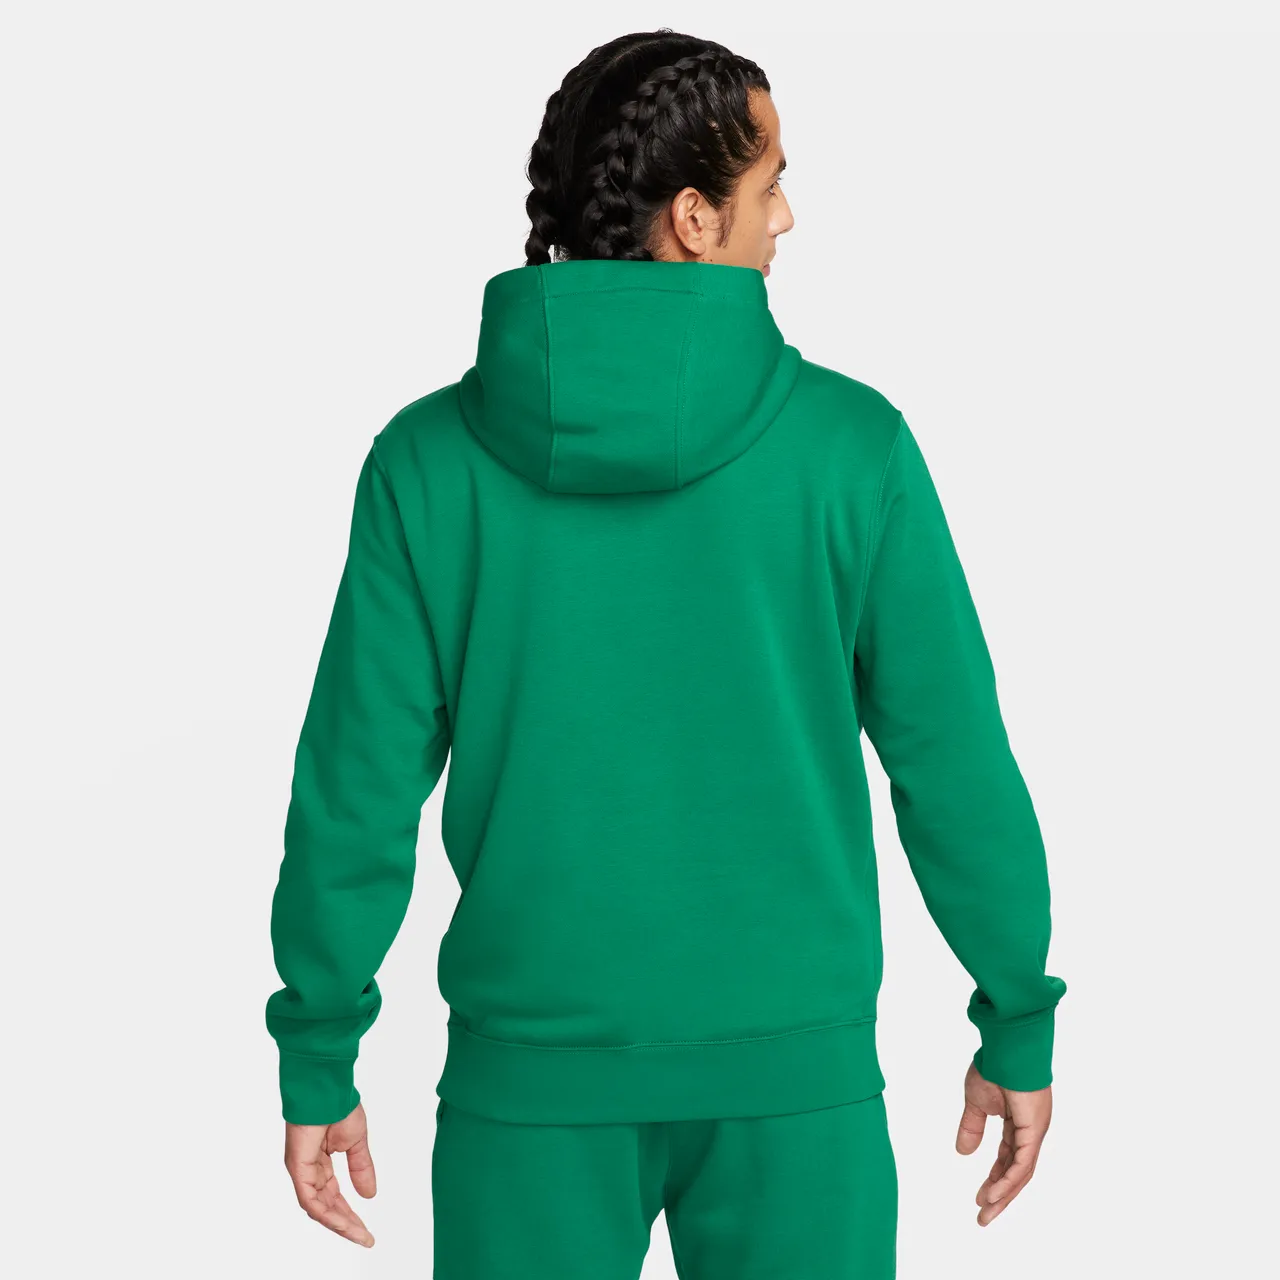 Nike Club Fleece Men's Pullover Hoodie - Green - Cotton